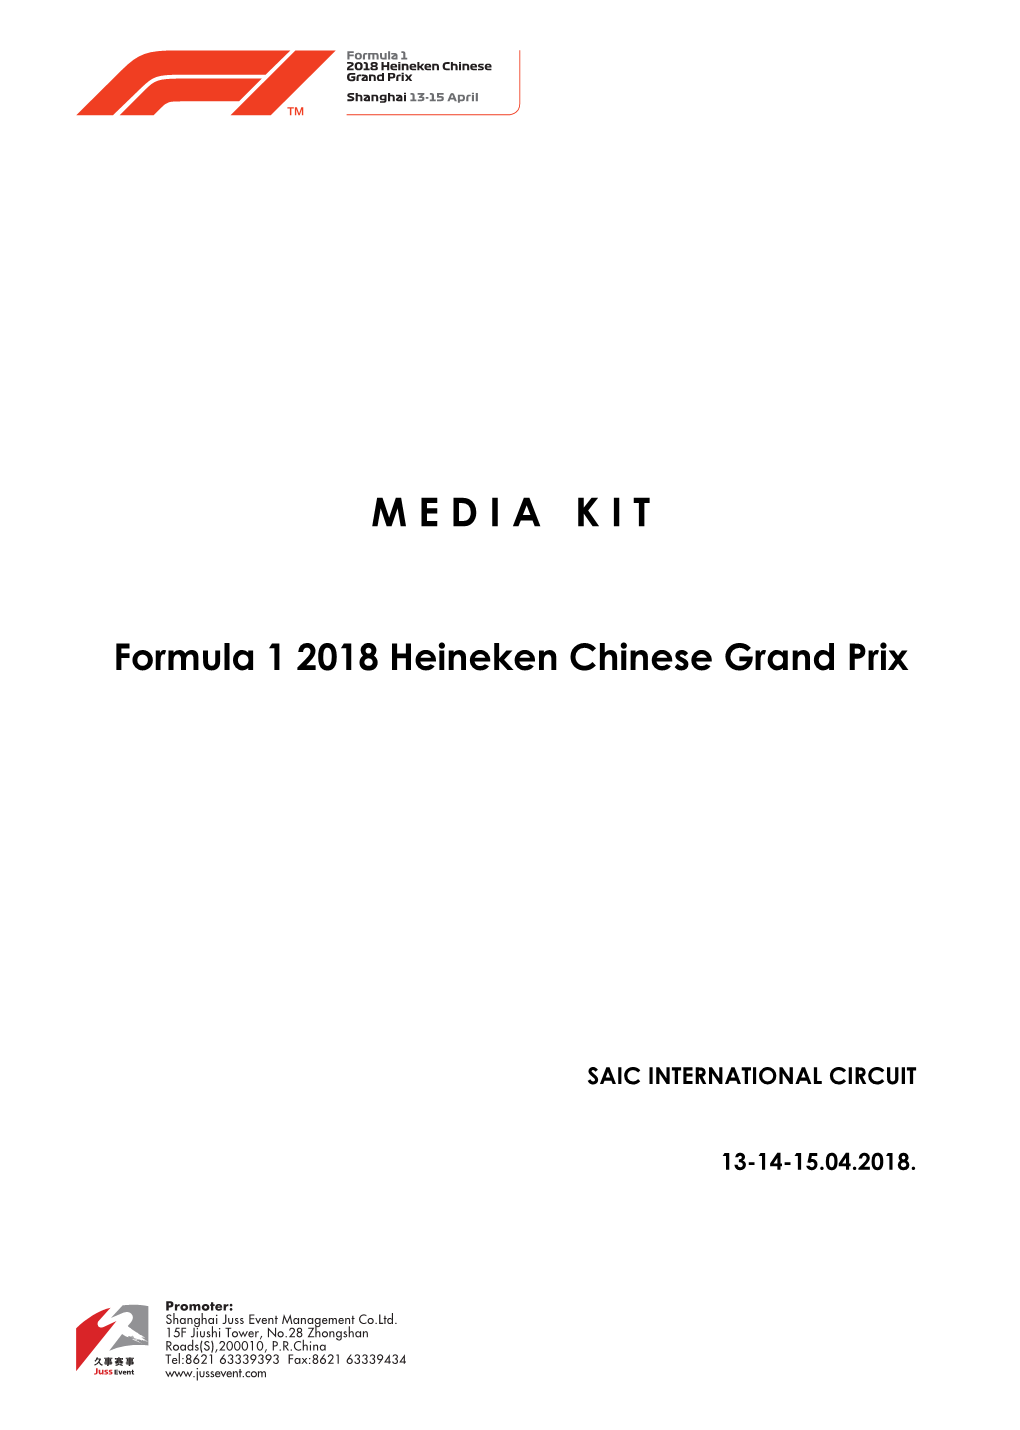 MEDIAKIT Formula 1 2018 Heineken Chinese Grand Prix